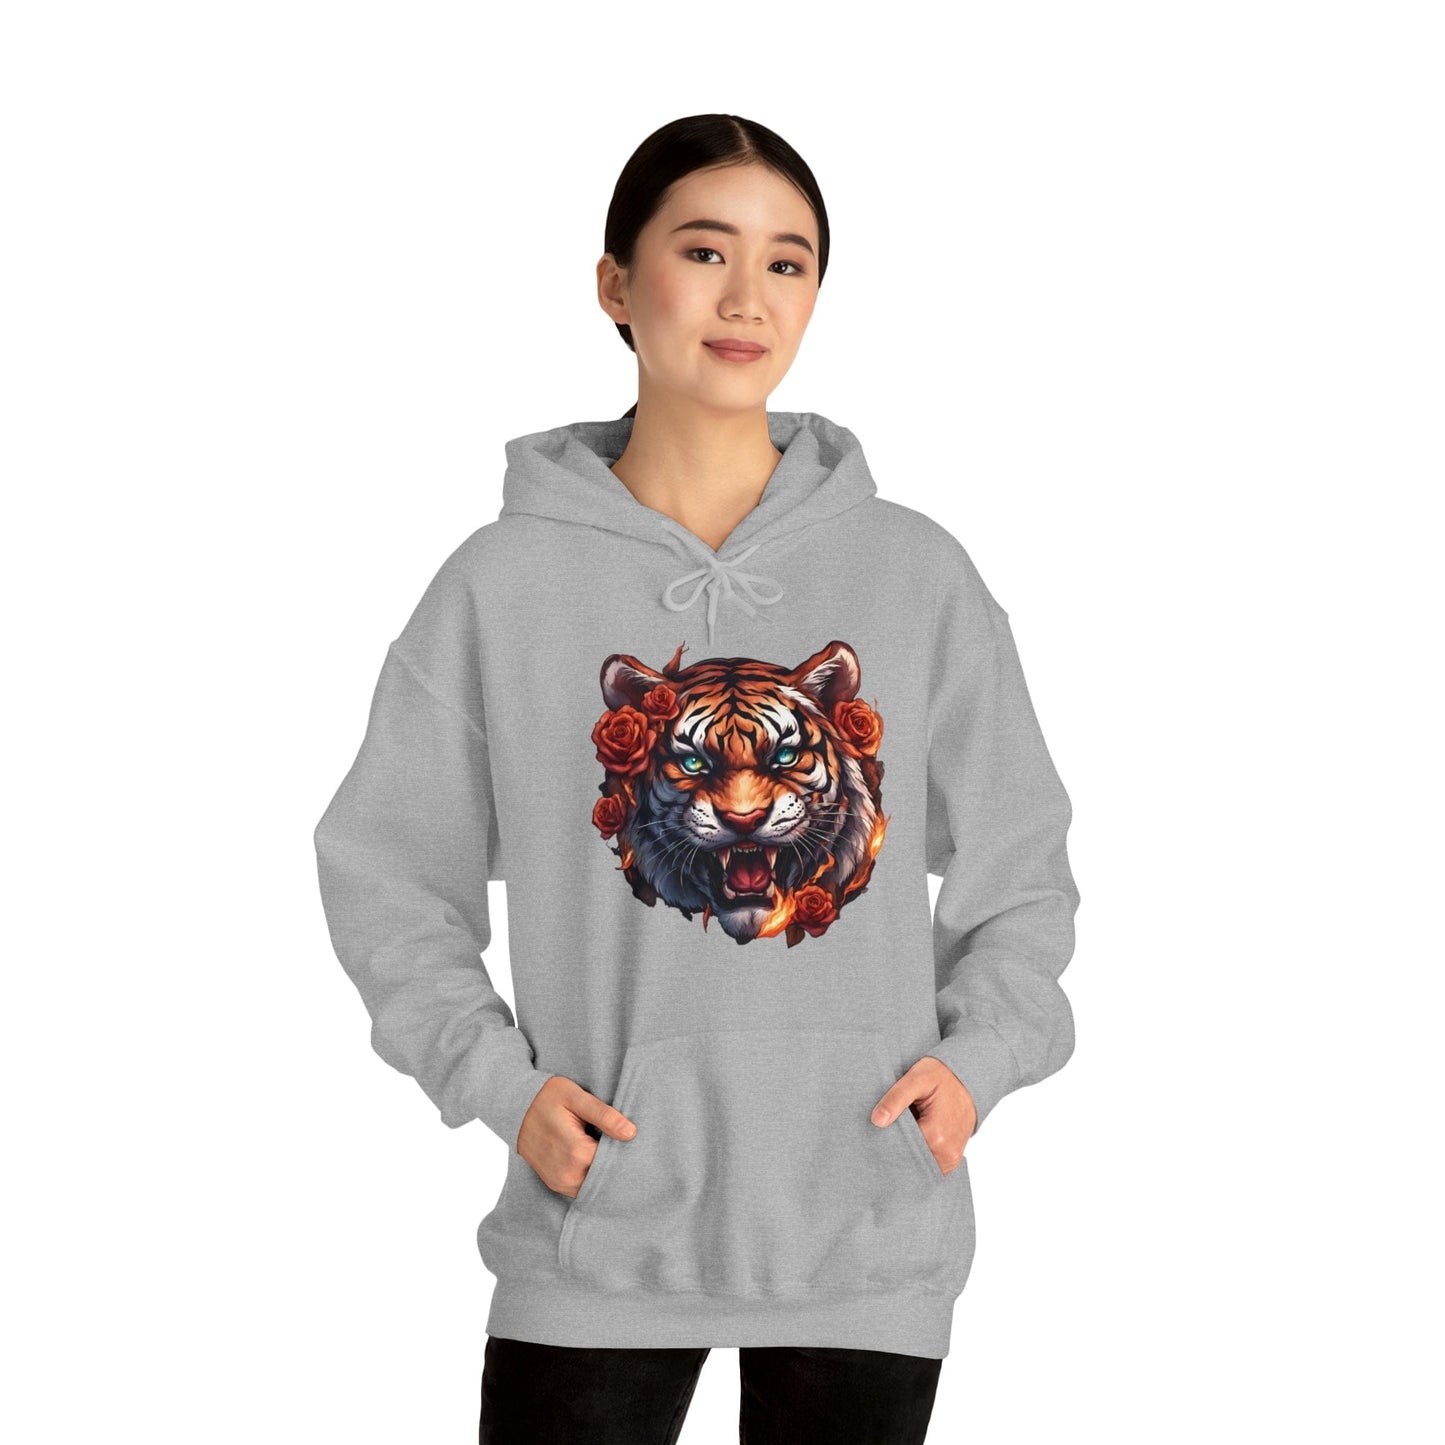 Eye of Tiger Flames and Roses Hooded Sweatshirt Flashlander